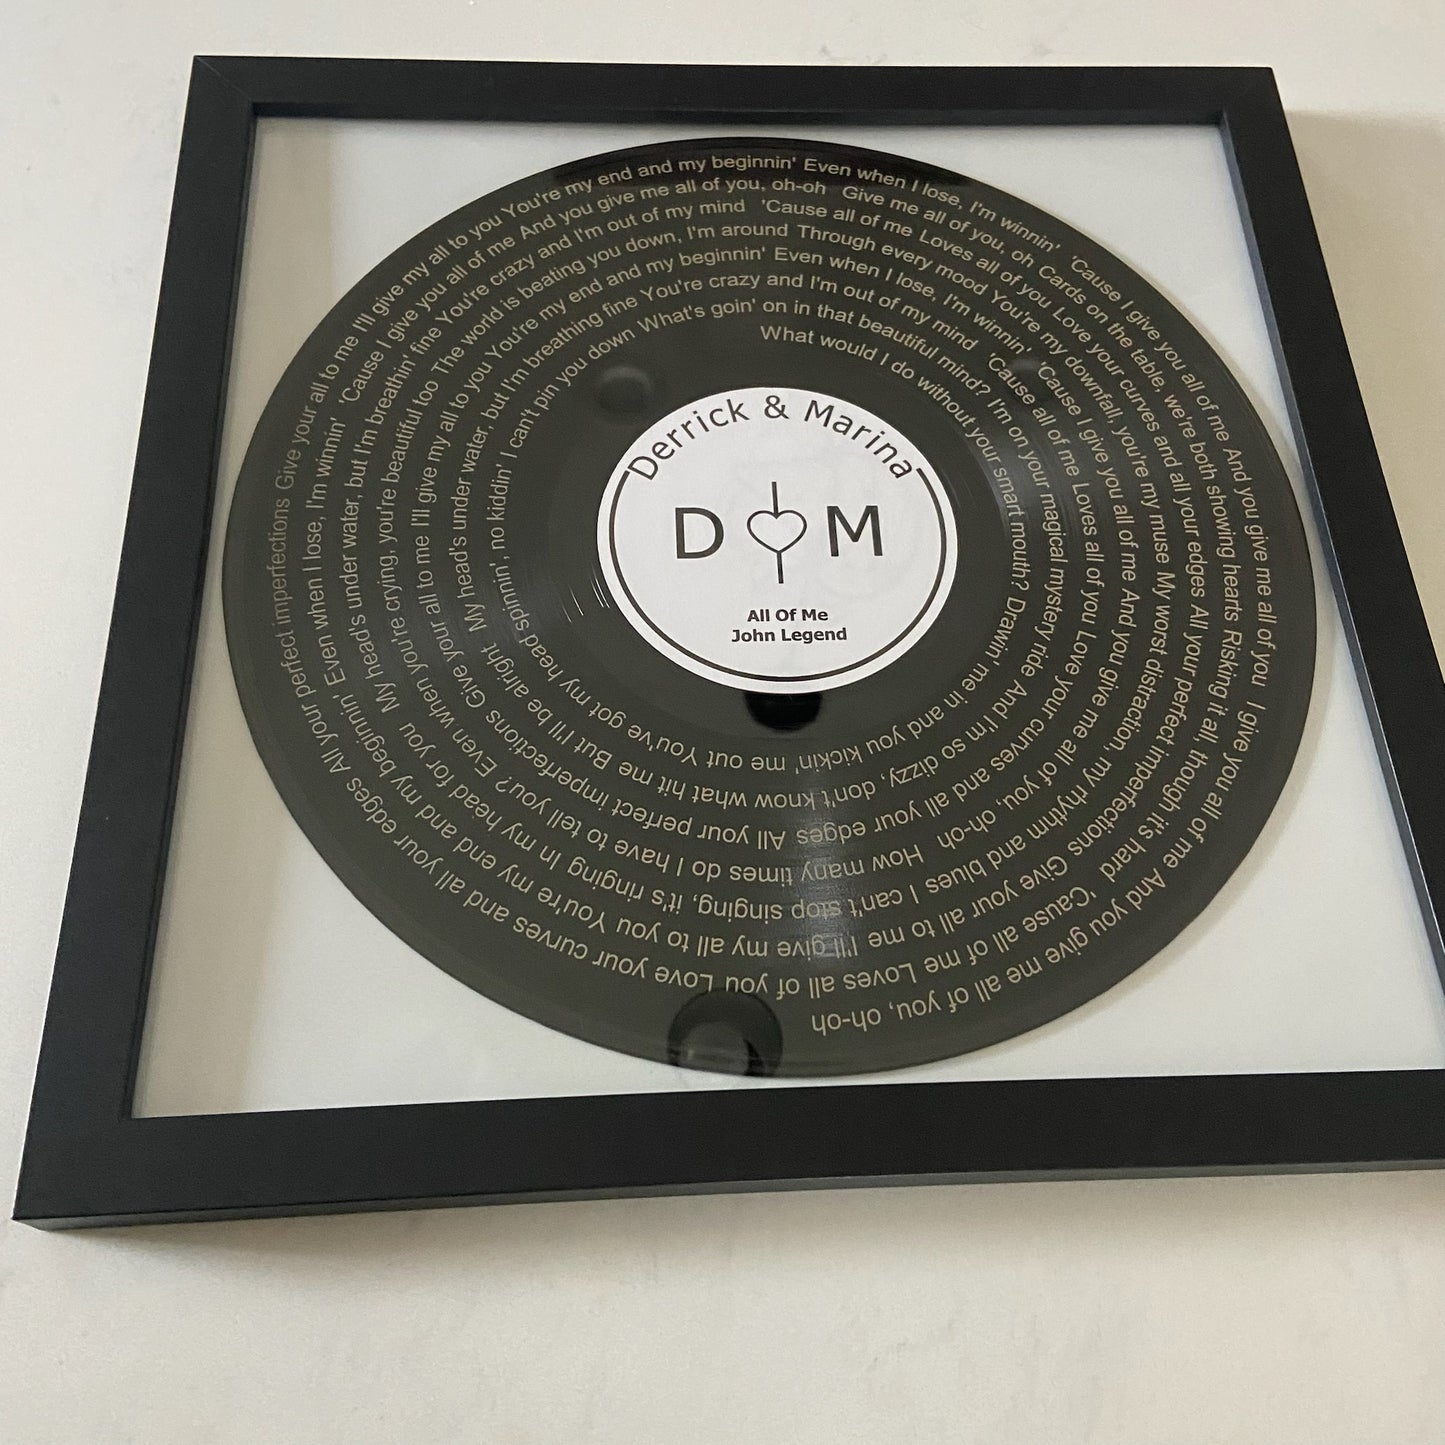 Laser-Marked Vinyl Record with Song Lyrics